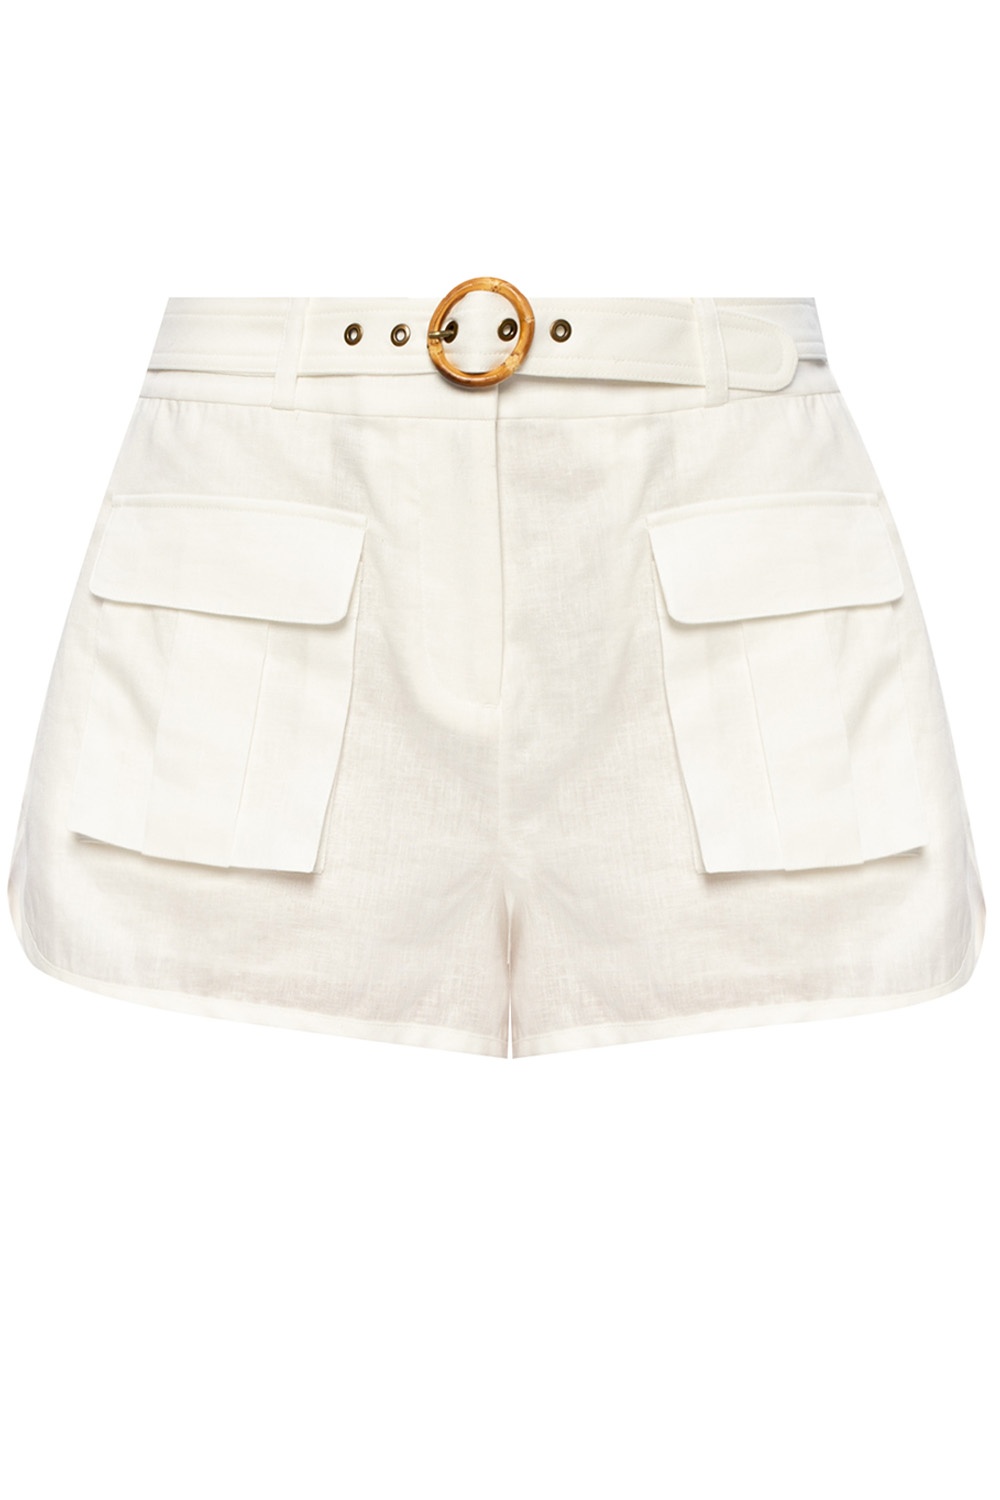 Zimmermann High-waisted shorts | Women's Clothing | Vitkac